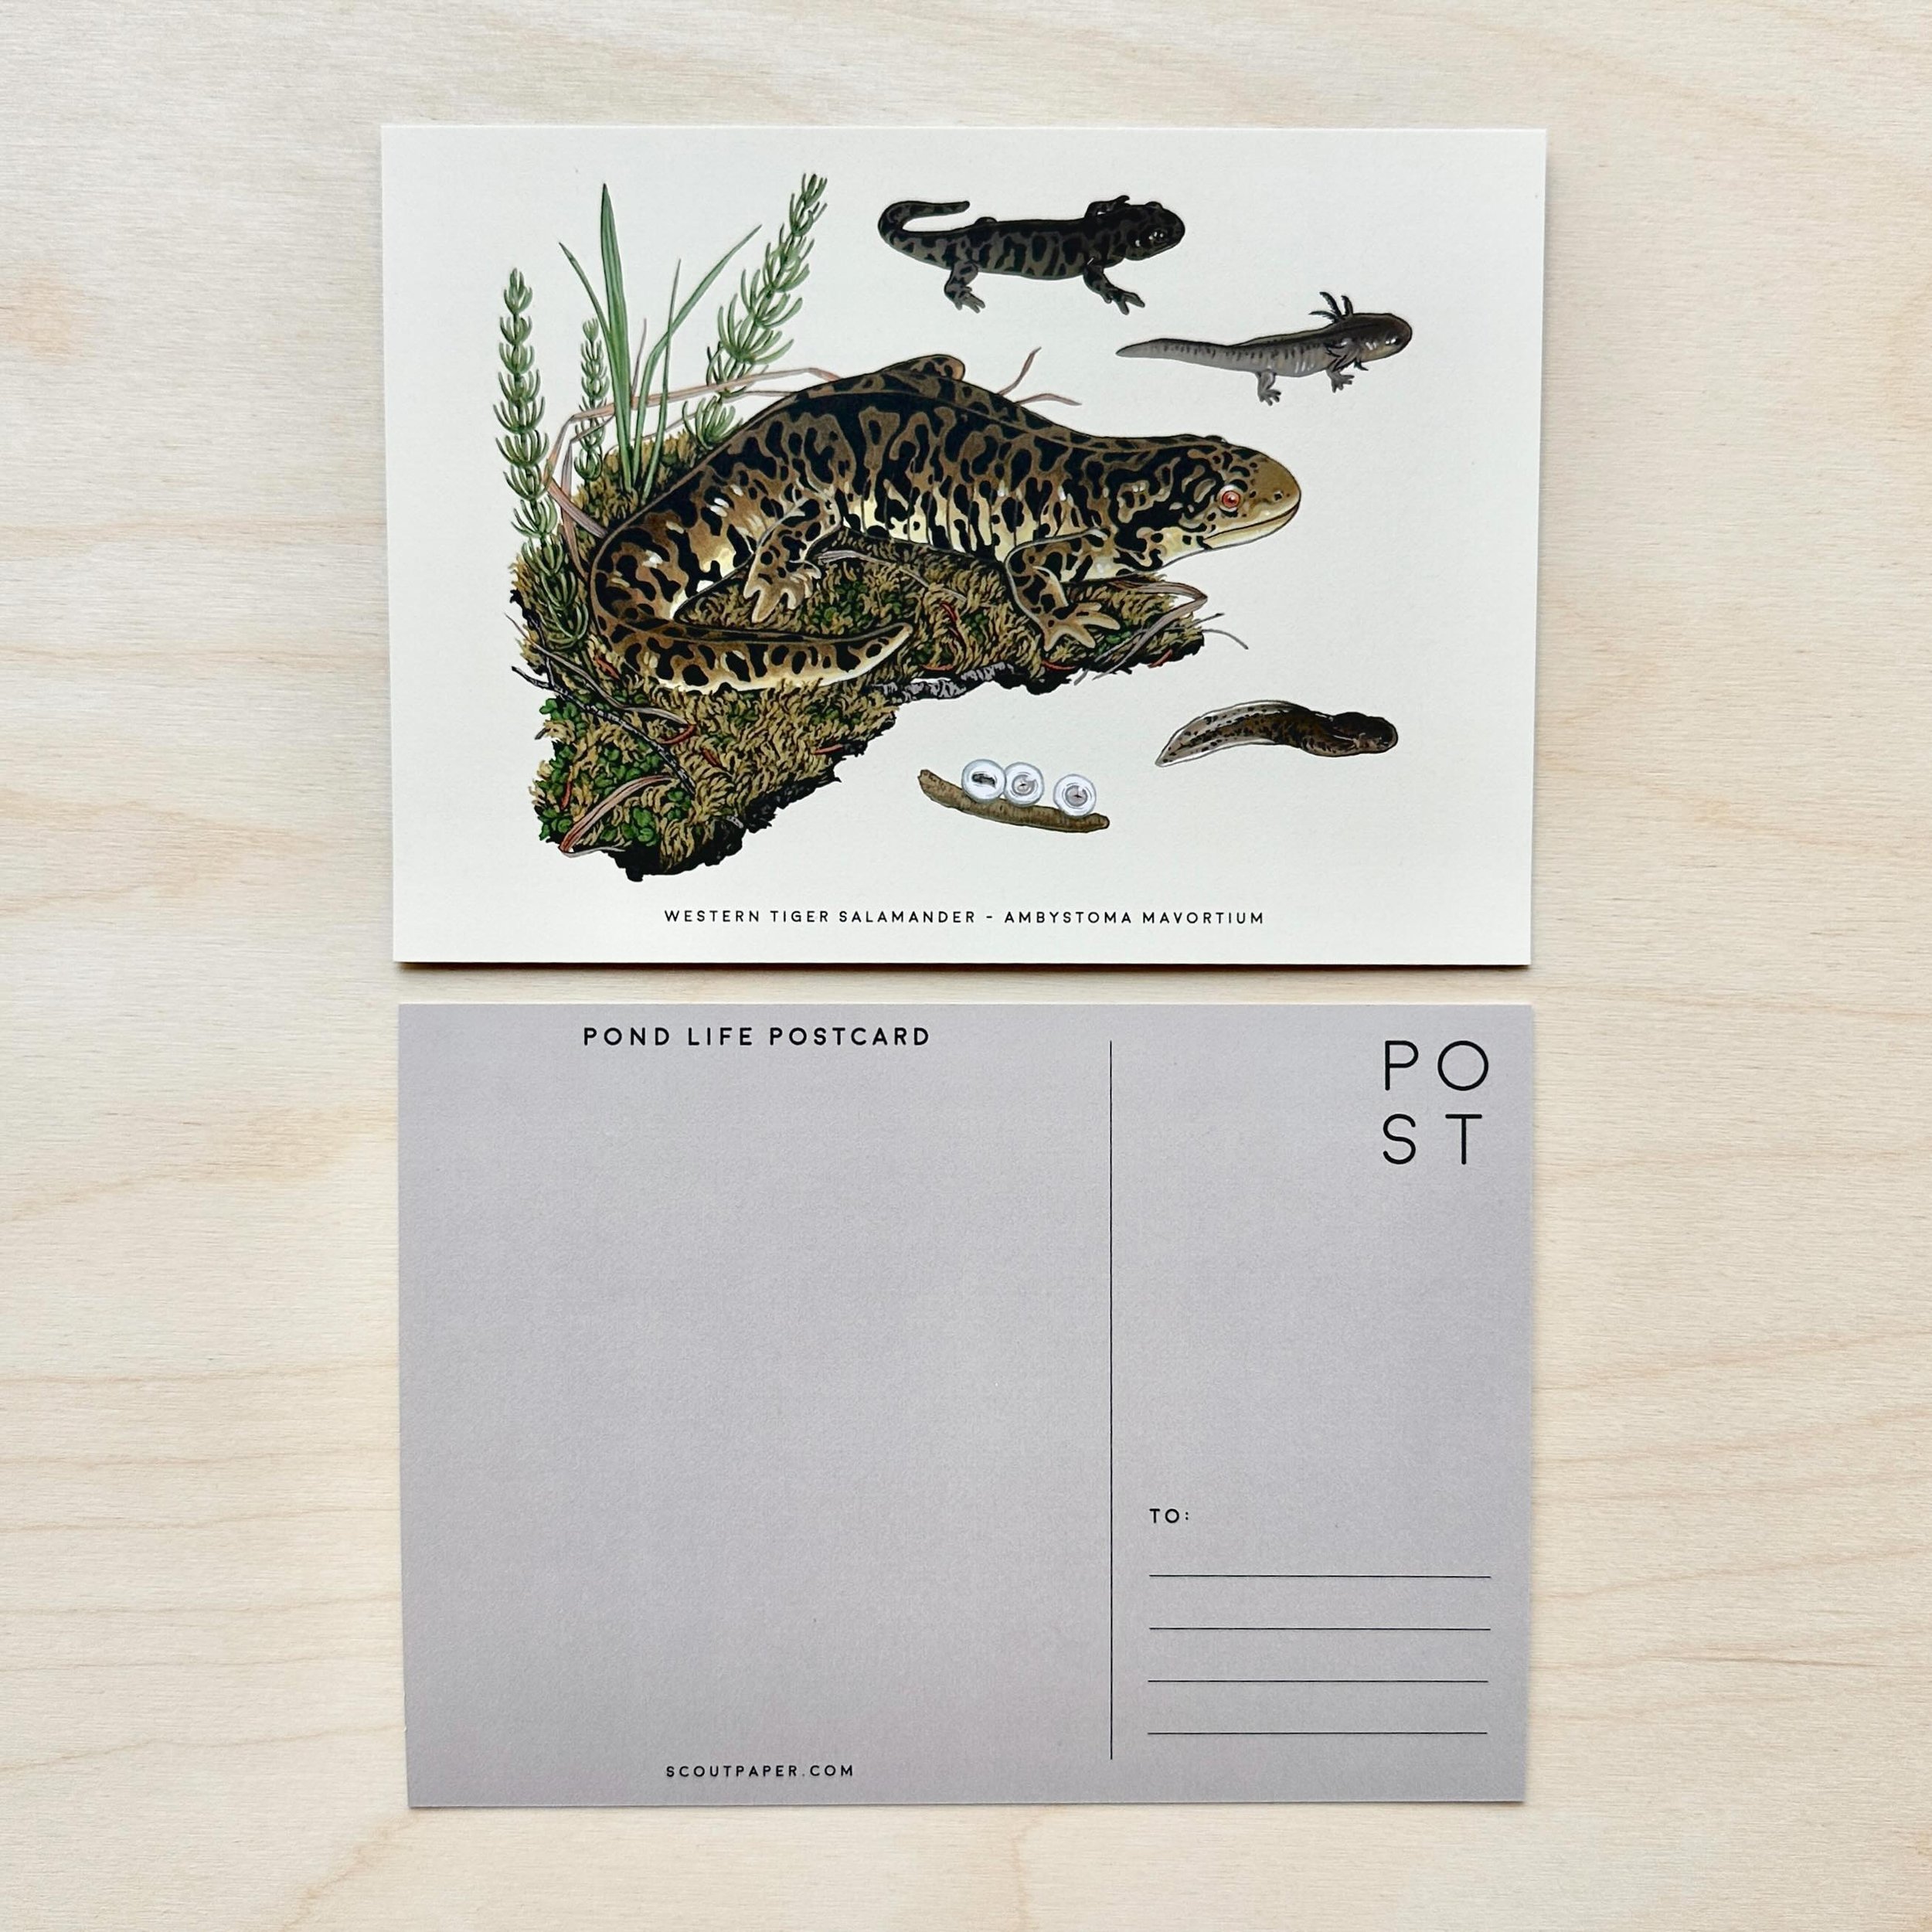 Western Tiger Salamander, one of 8 postcards in the Pond Life postcard pack.